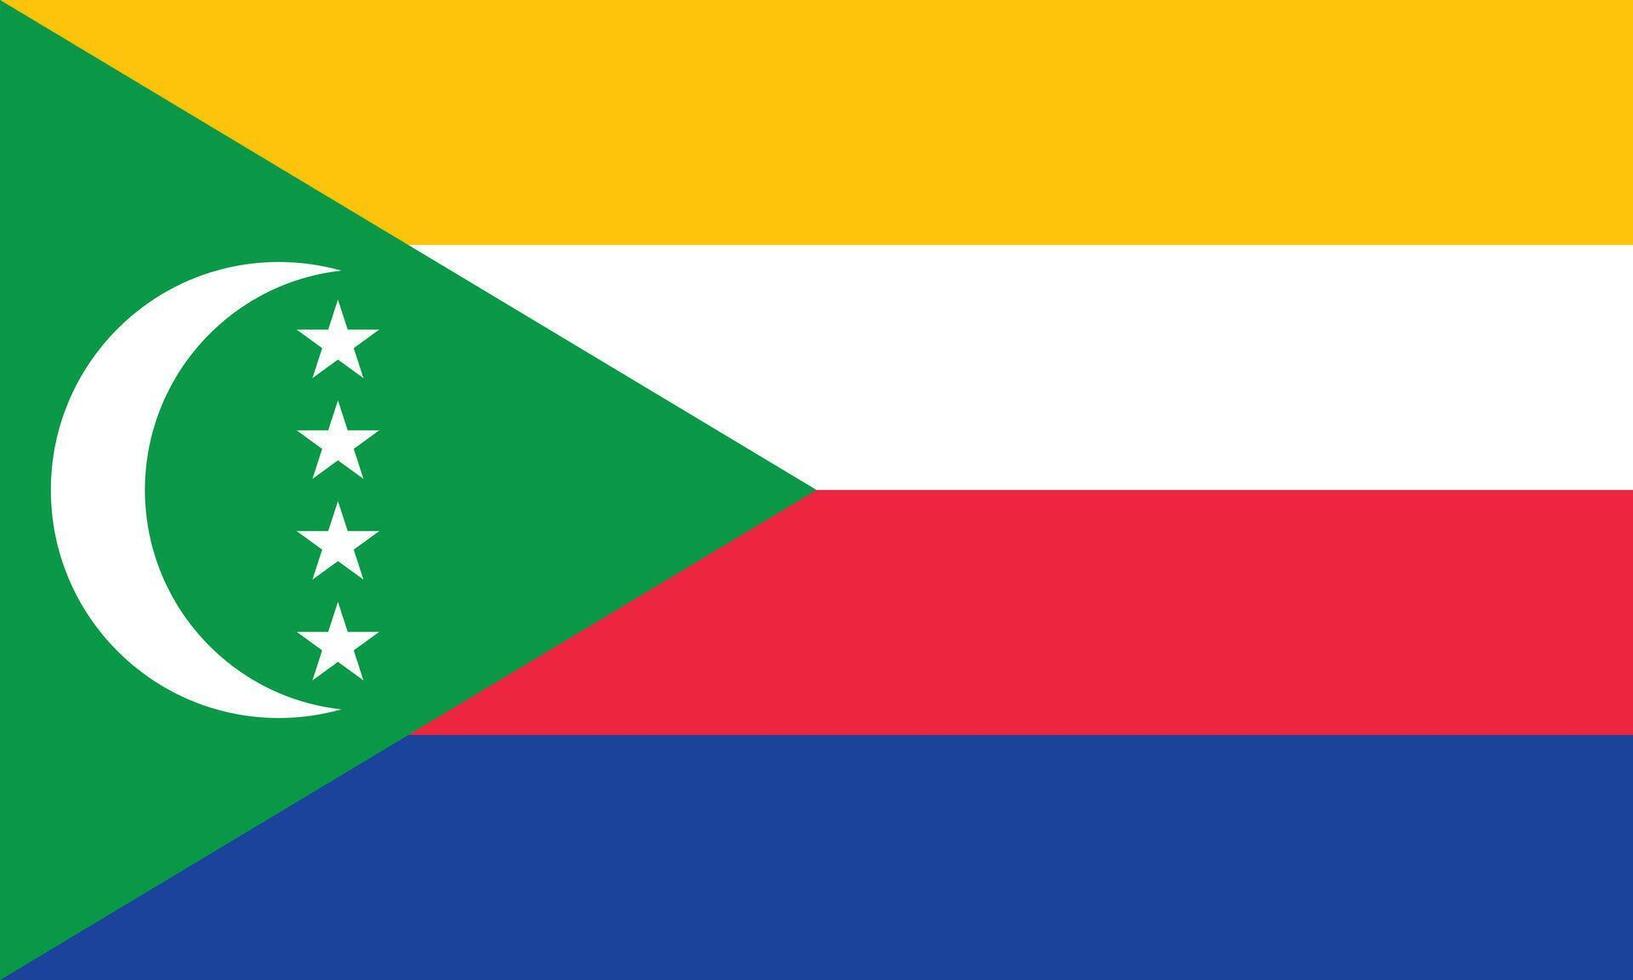 Flat Illustration of Comoros national flag. Comoros flag design. vector